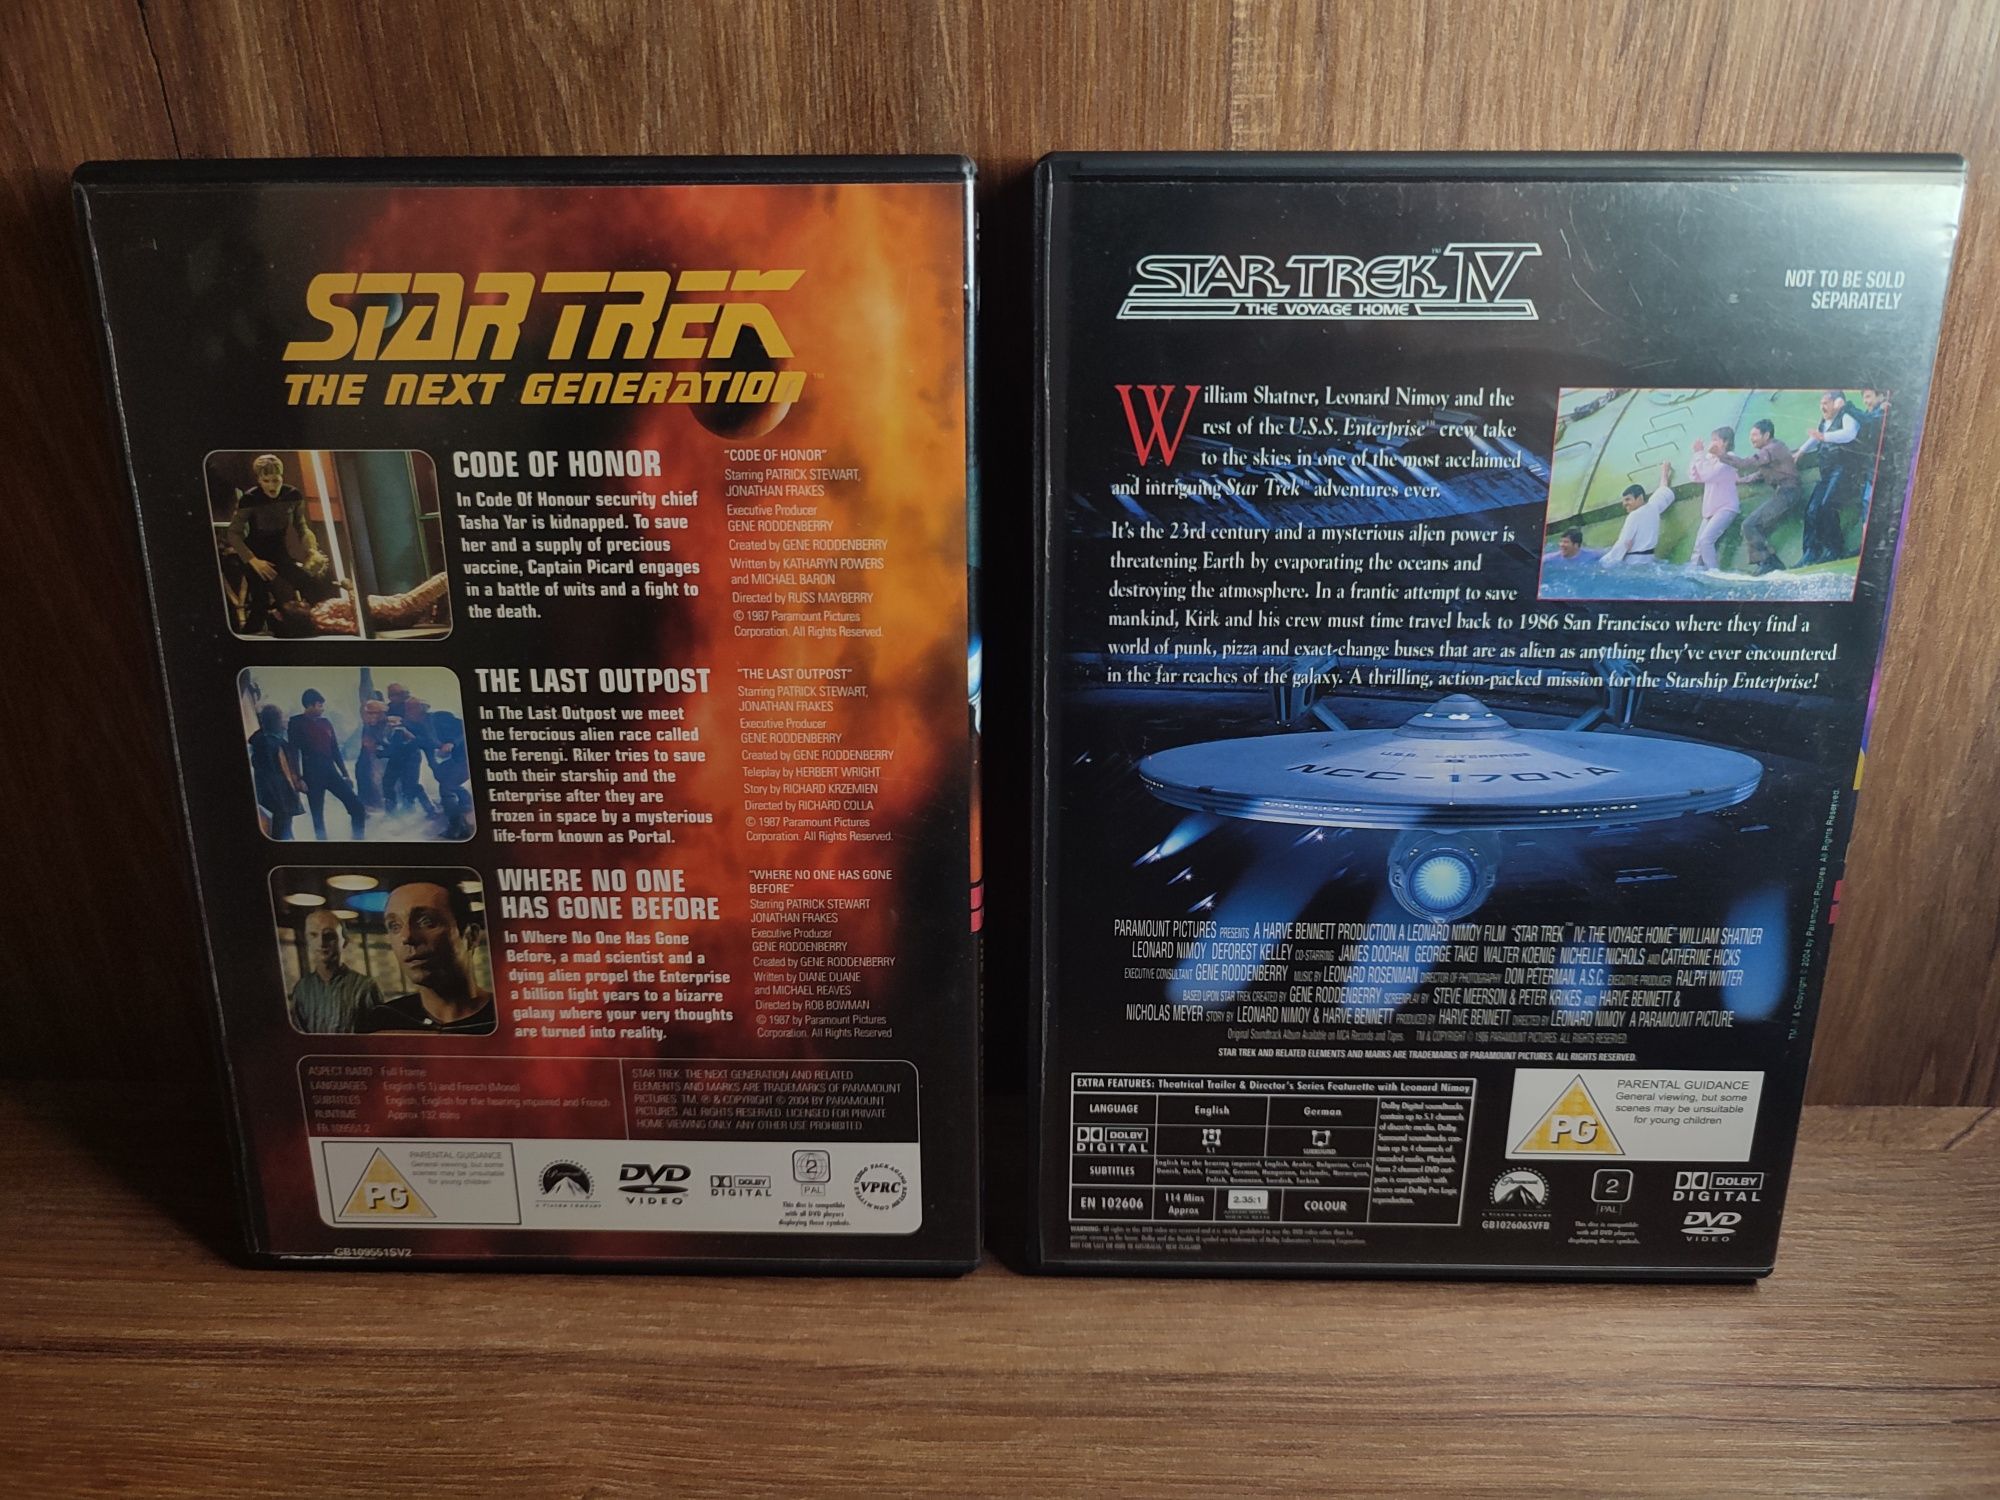 Диски DVD Star Trek The Collector's edition, фильмы IV The Voyage Home